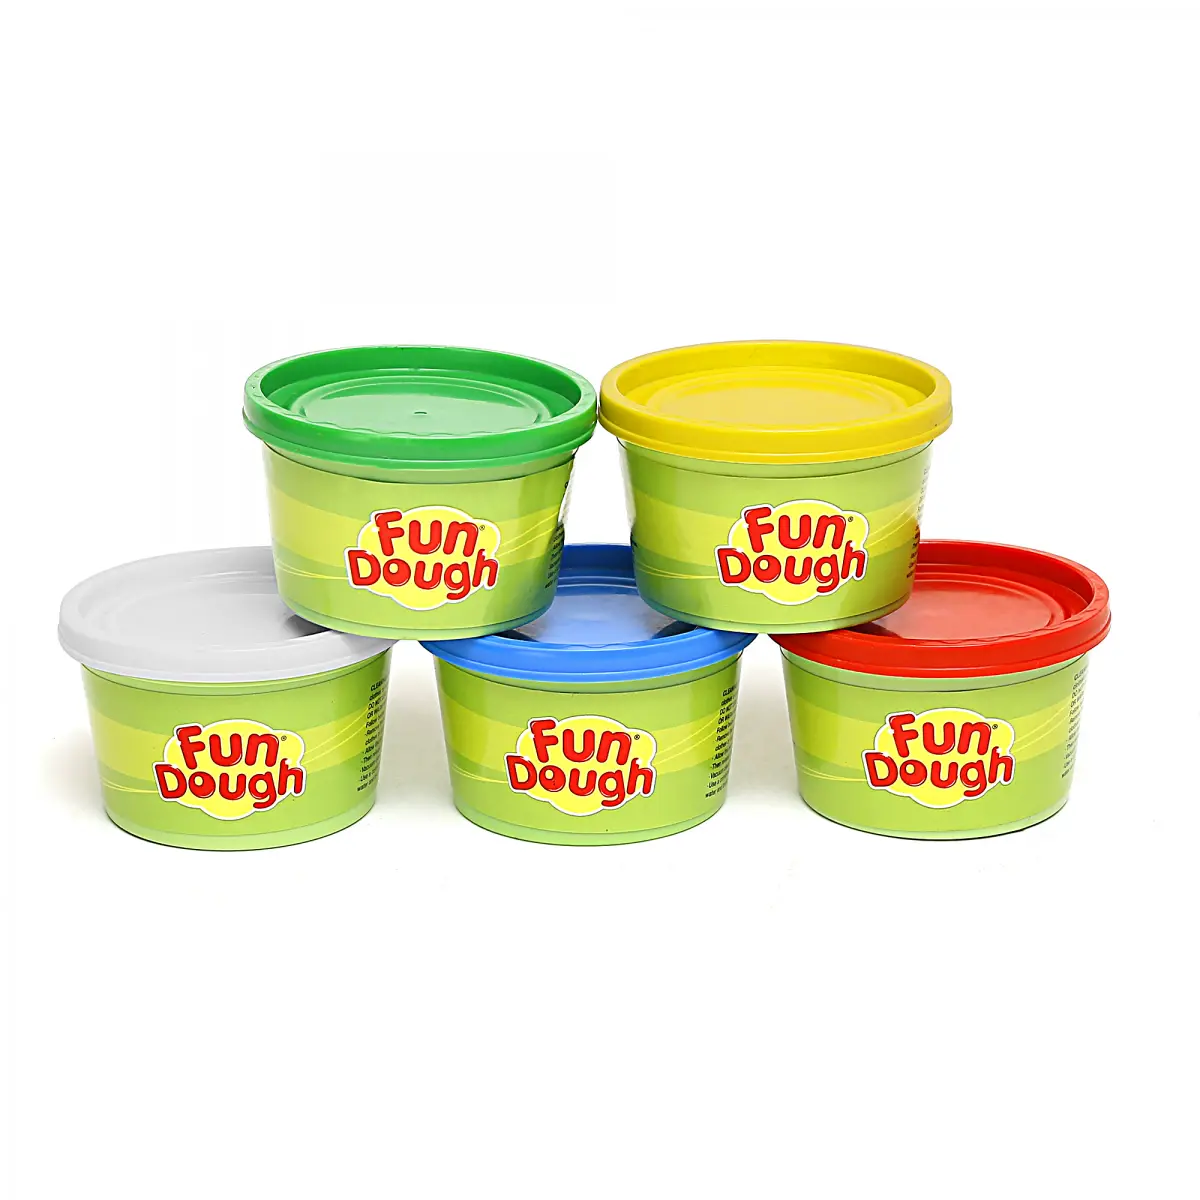 Funskool Fun Dough Bumper Dough Kit with 5 tubs of 75g each & Accessories, 3Y+, Multicolour